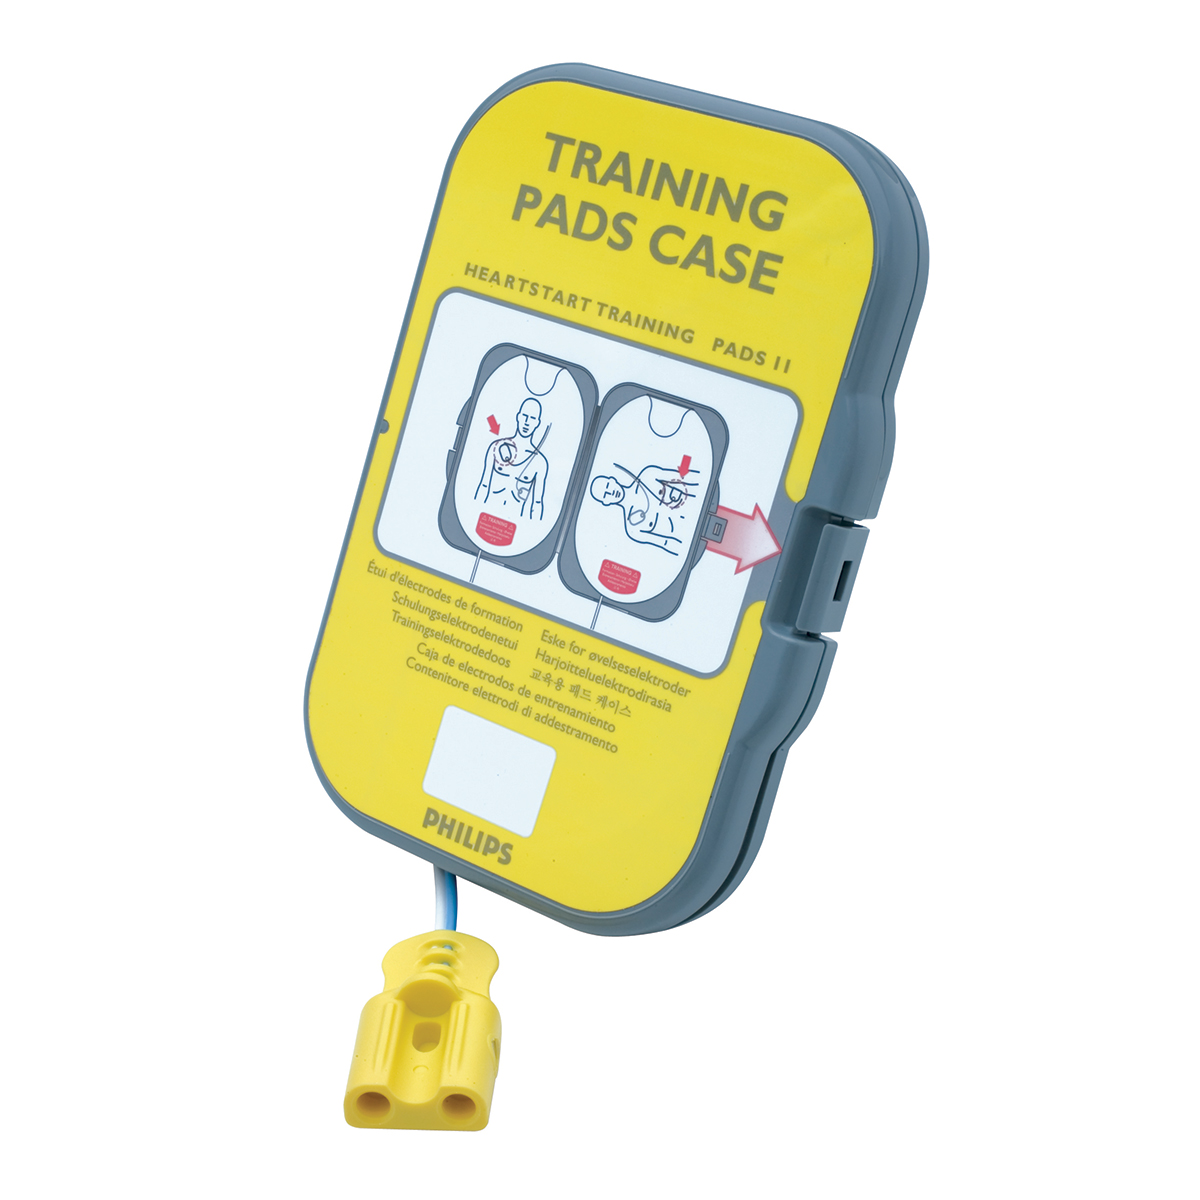 Training Electrode Pads II Cartridge for Philips Heartstart® FRx Trainer